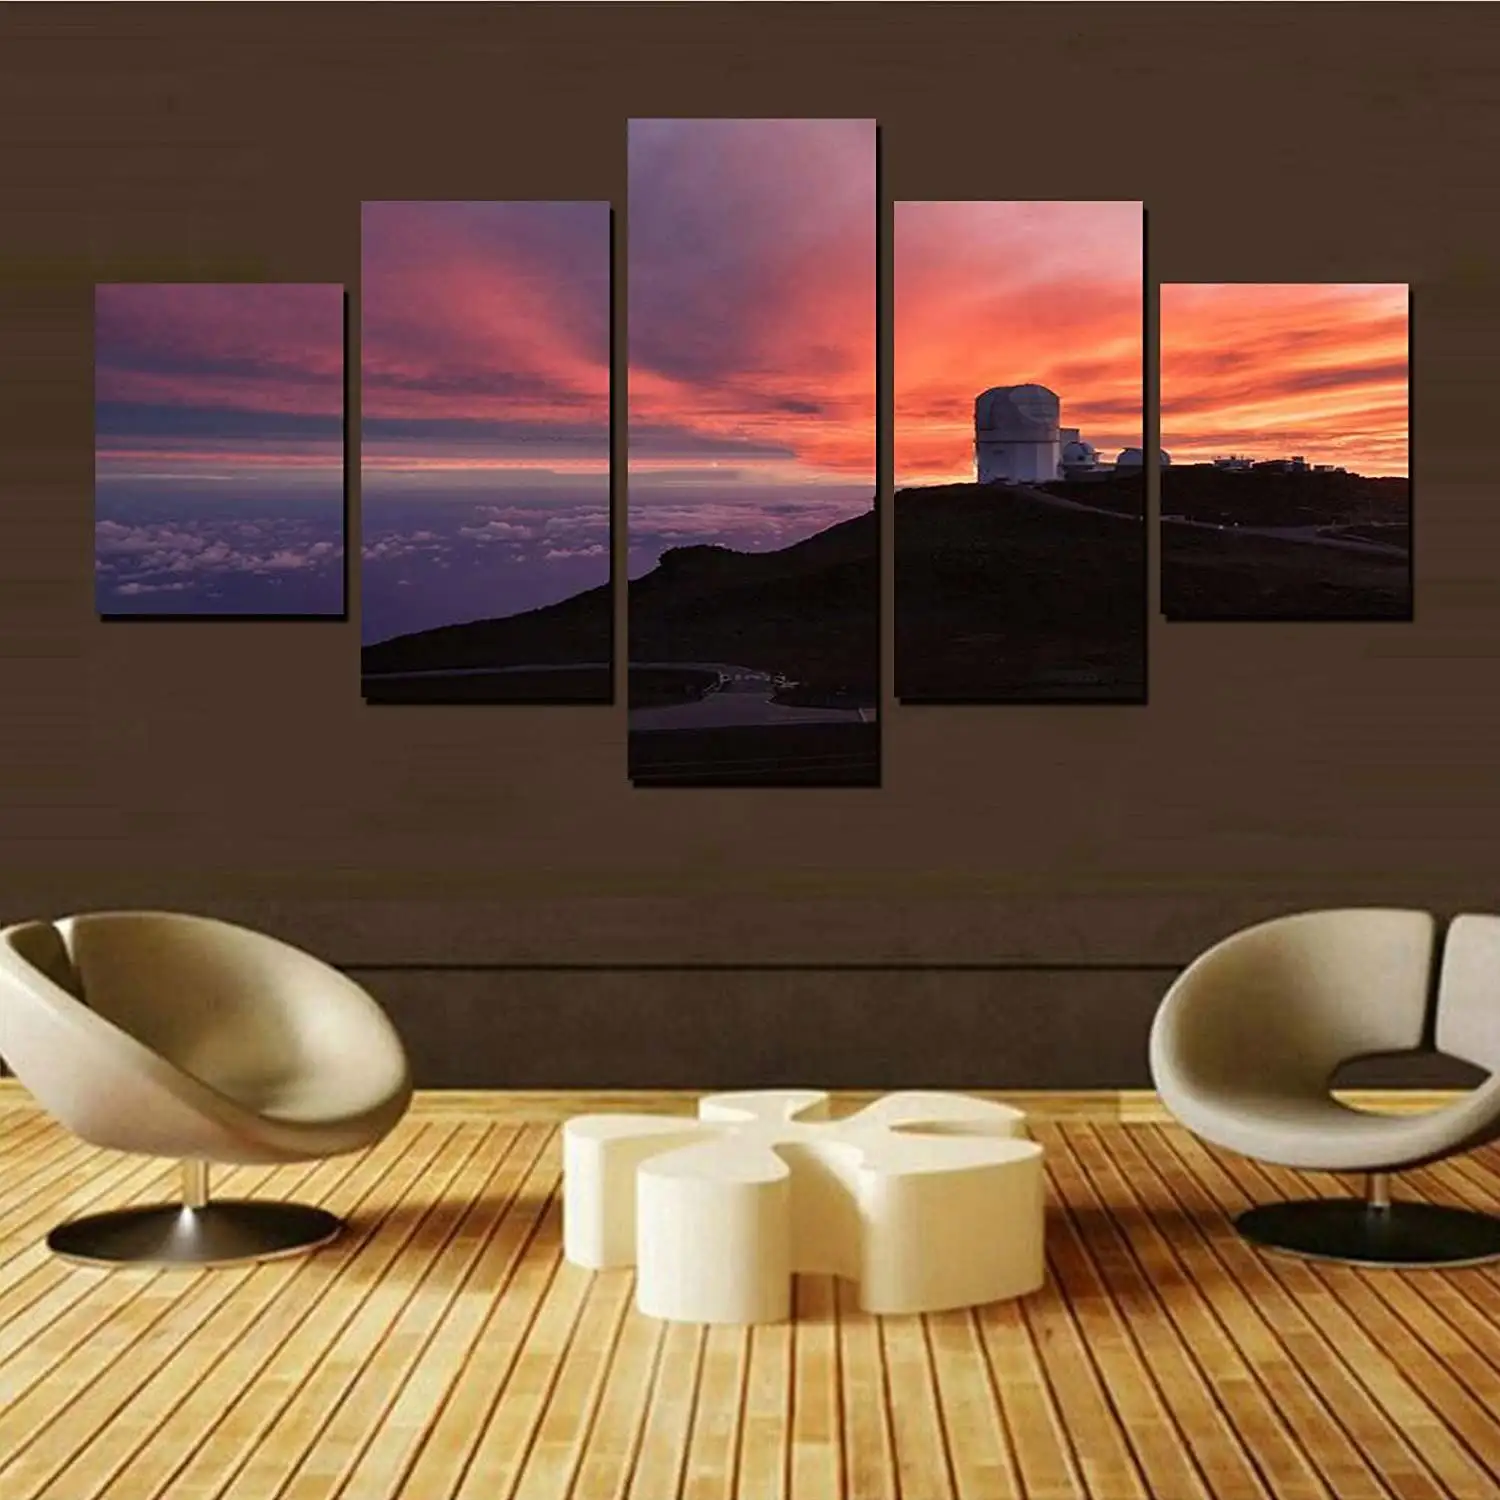 Hawaii Maui Island Wall Decor Haleakala National Park Observatory Sunset Scenery Art Picture Canvas Print Poster Painting